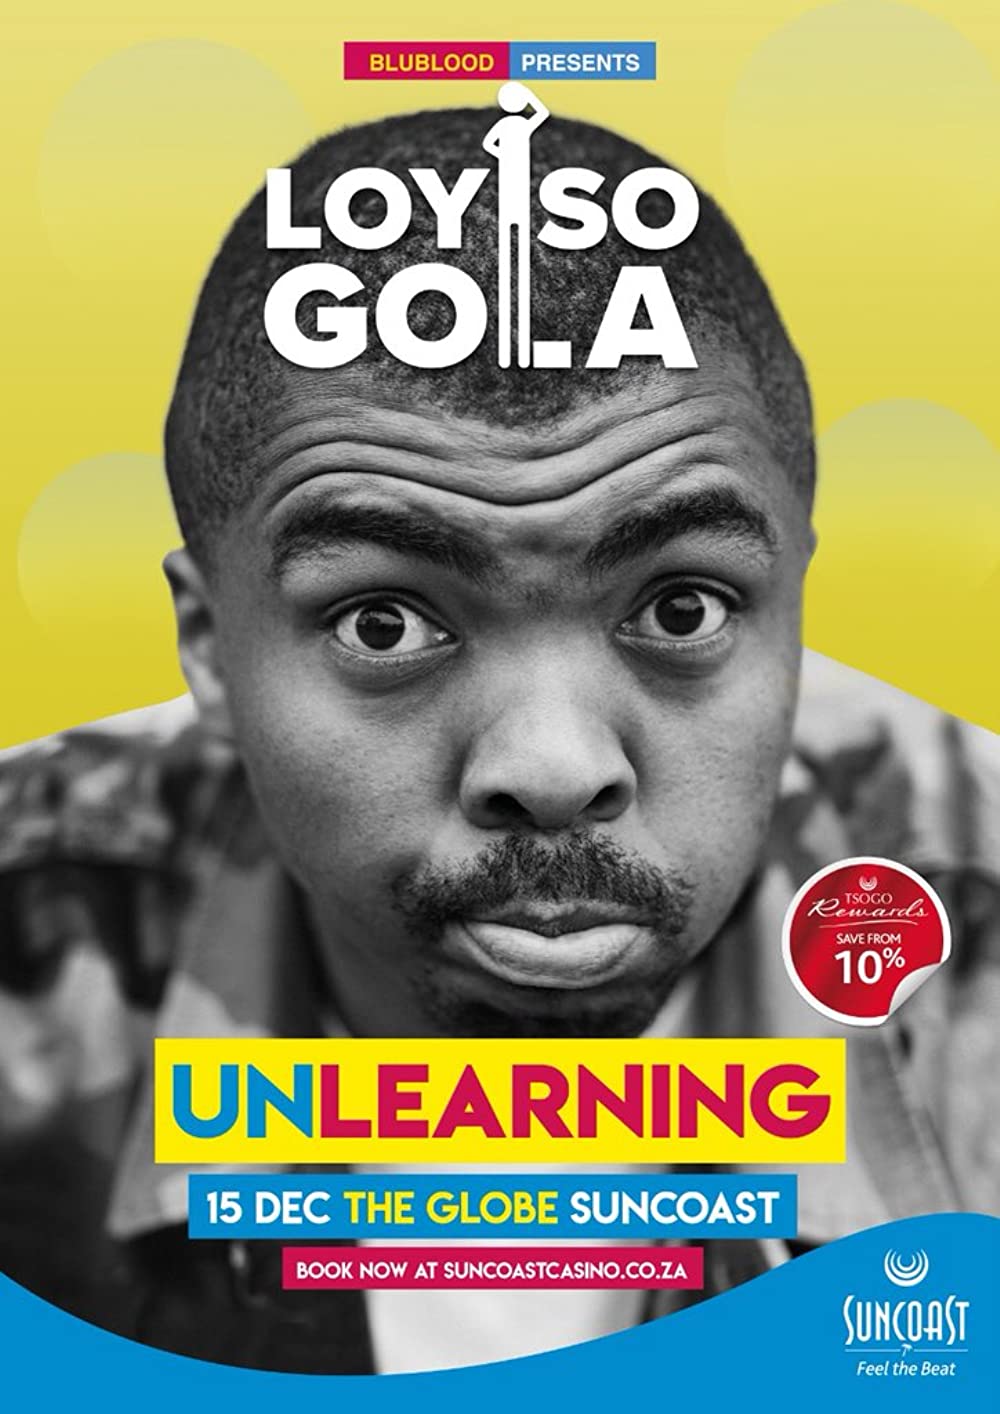 Filmbeschreibung zu Loyiso Gola: Unlearning